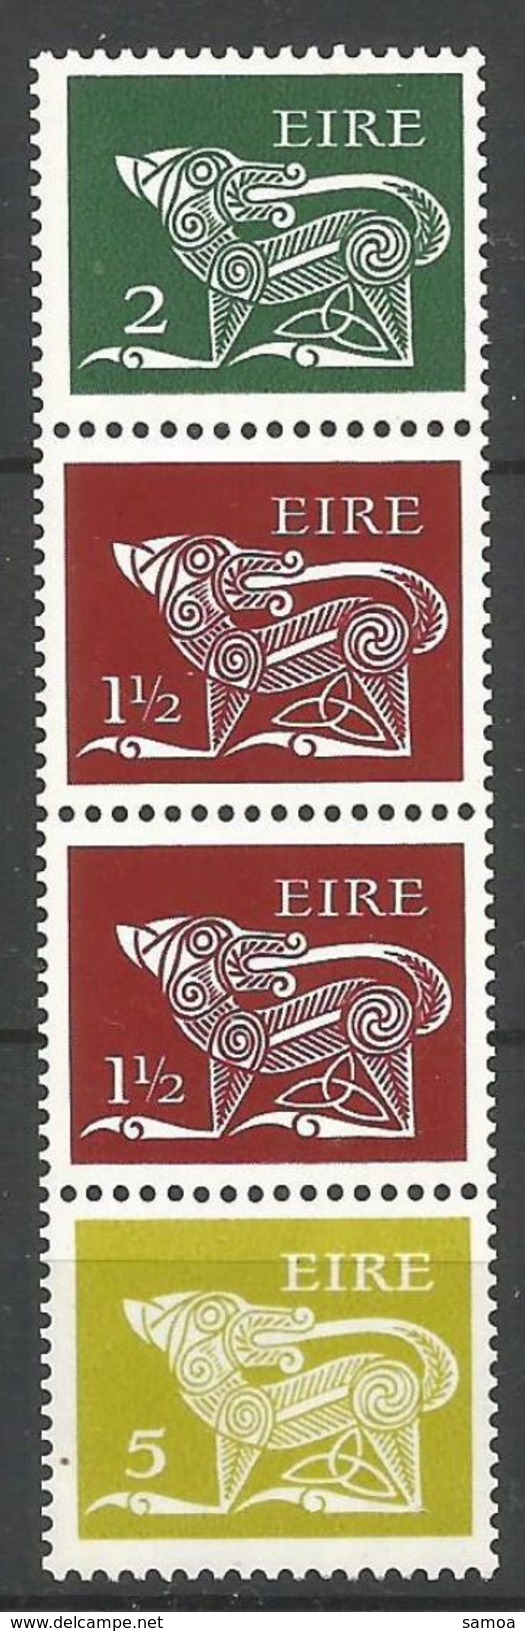 Irlande 1974 300 B ** Chien Stylisé Broche Bande De 4 Timbres 300 A 254 A 254 A 255 A - Unused Stamps